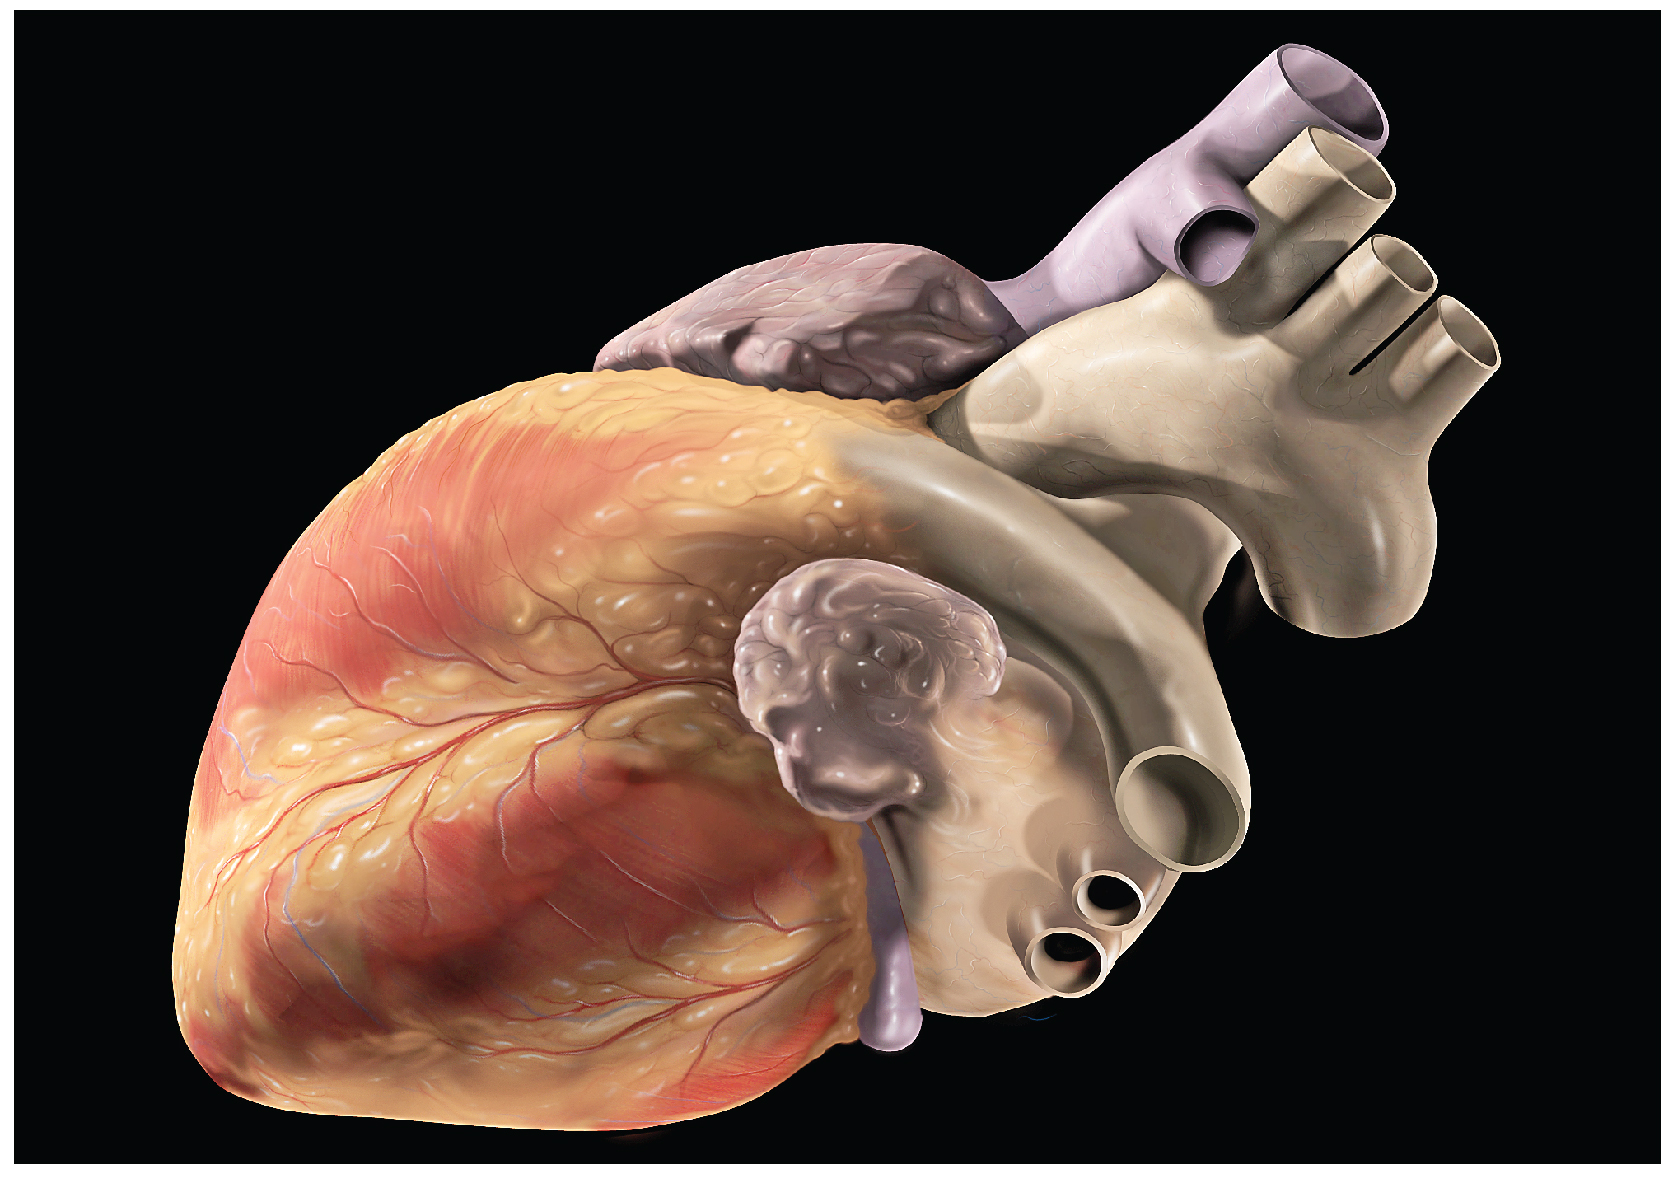 Figure 19.1 Human Heart